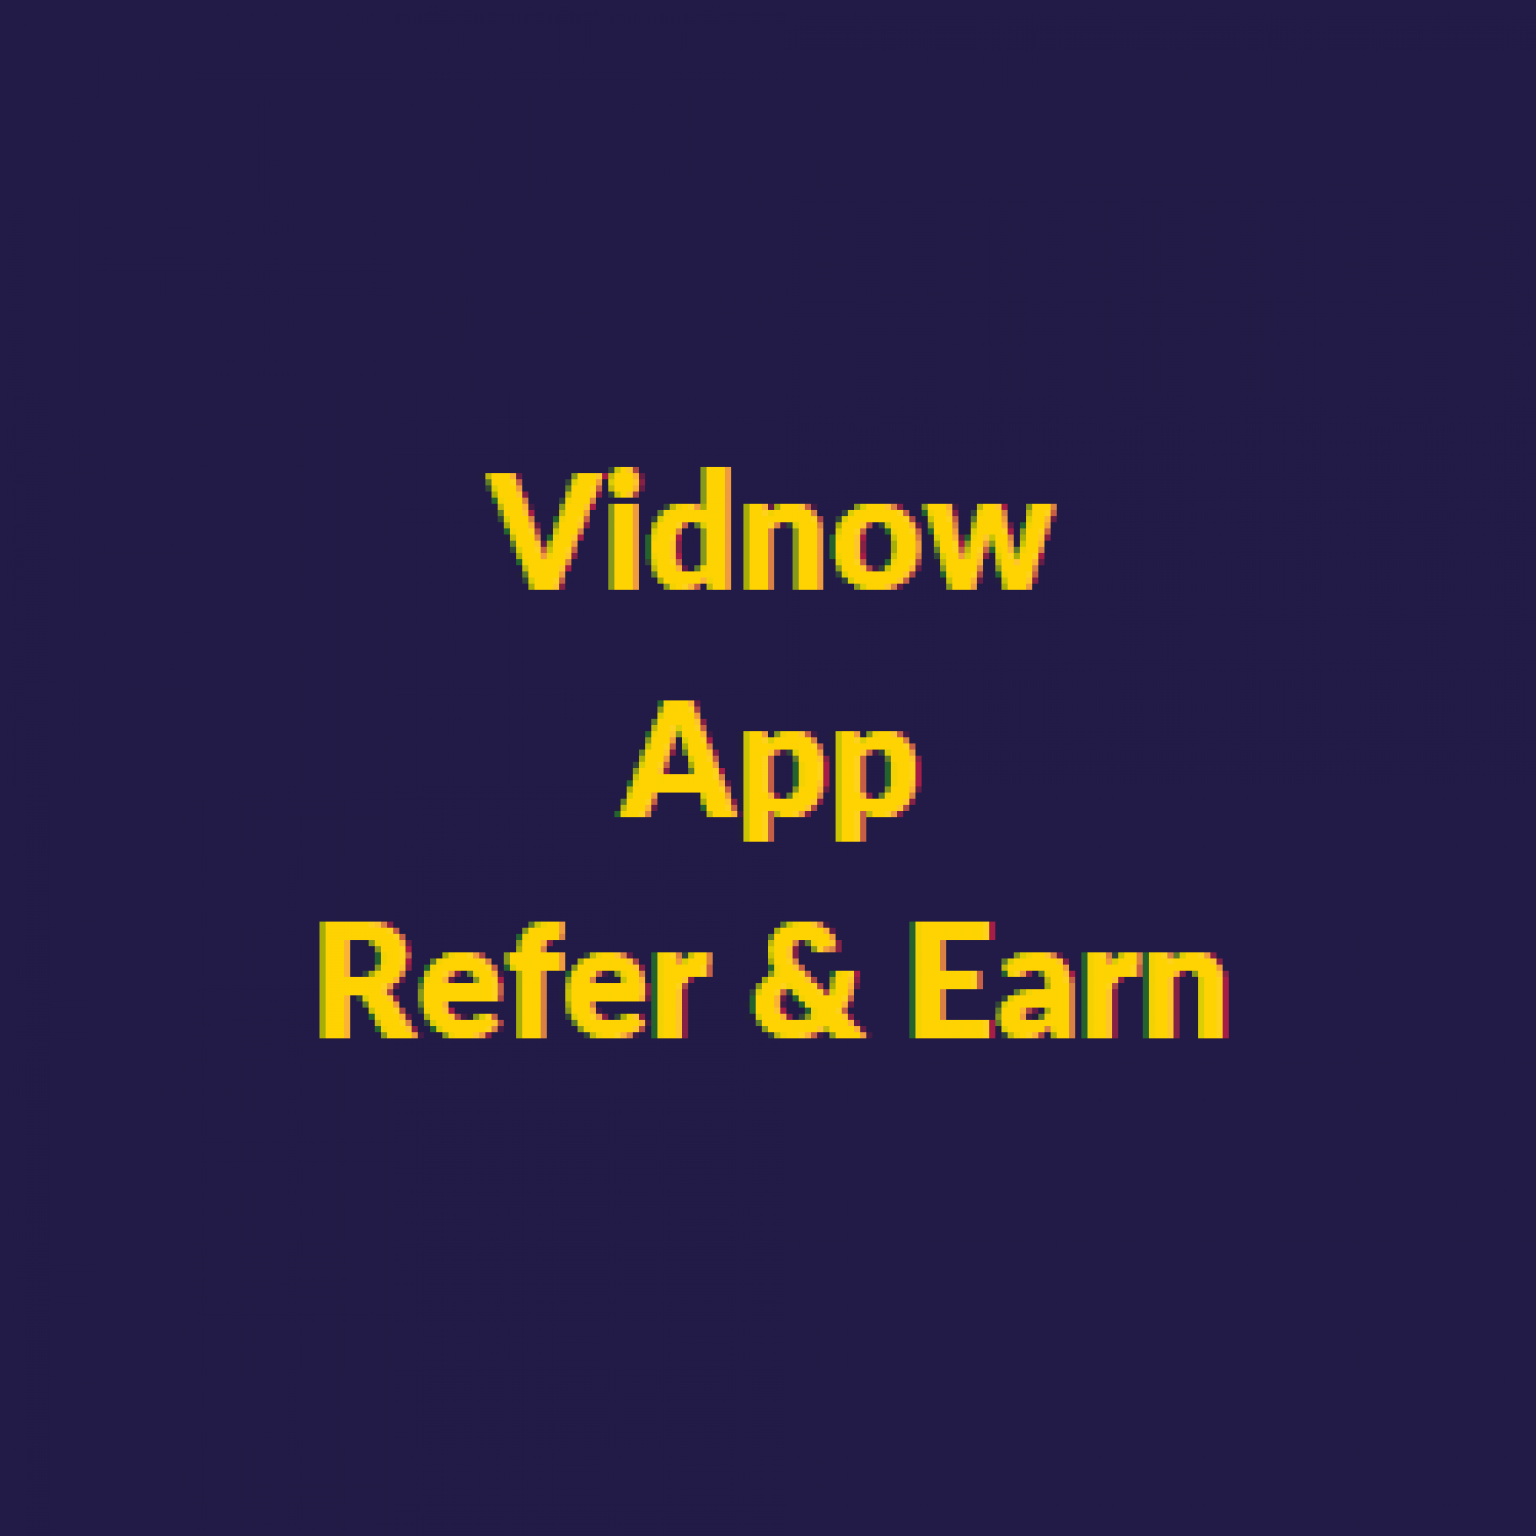 Vidnow App Refer & Earn [2021]: Download & Get Rs 10